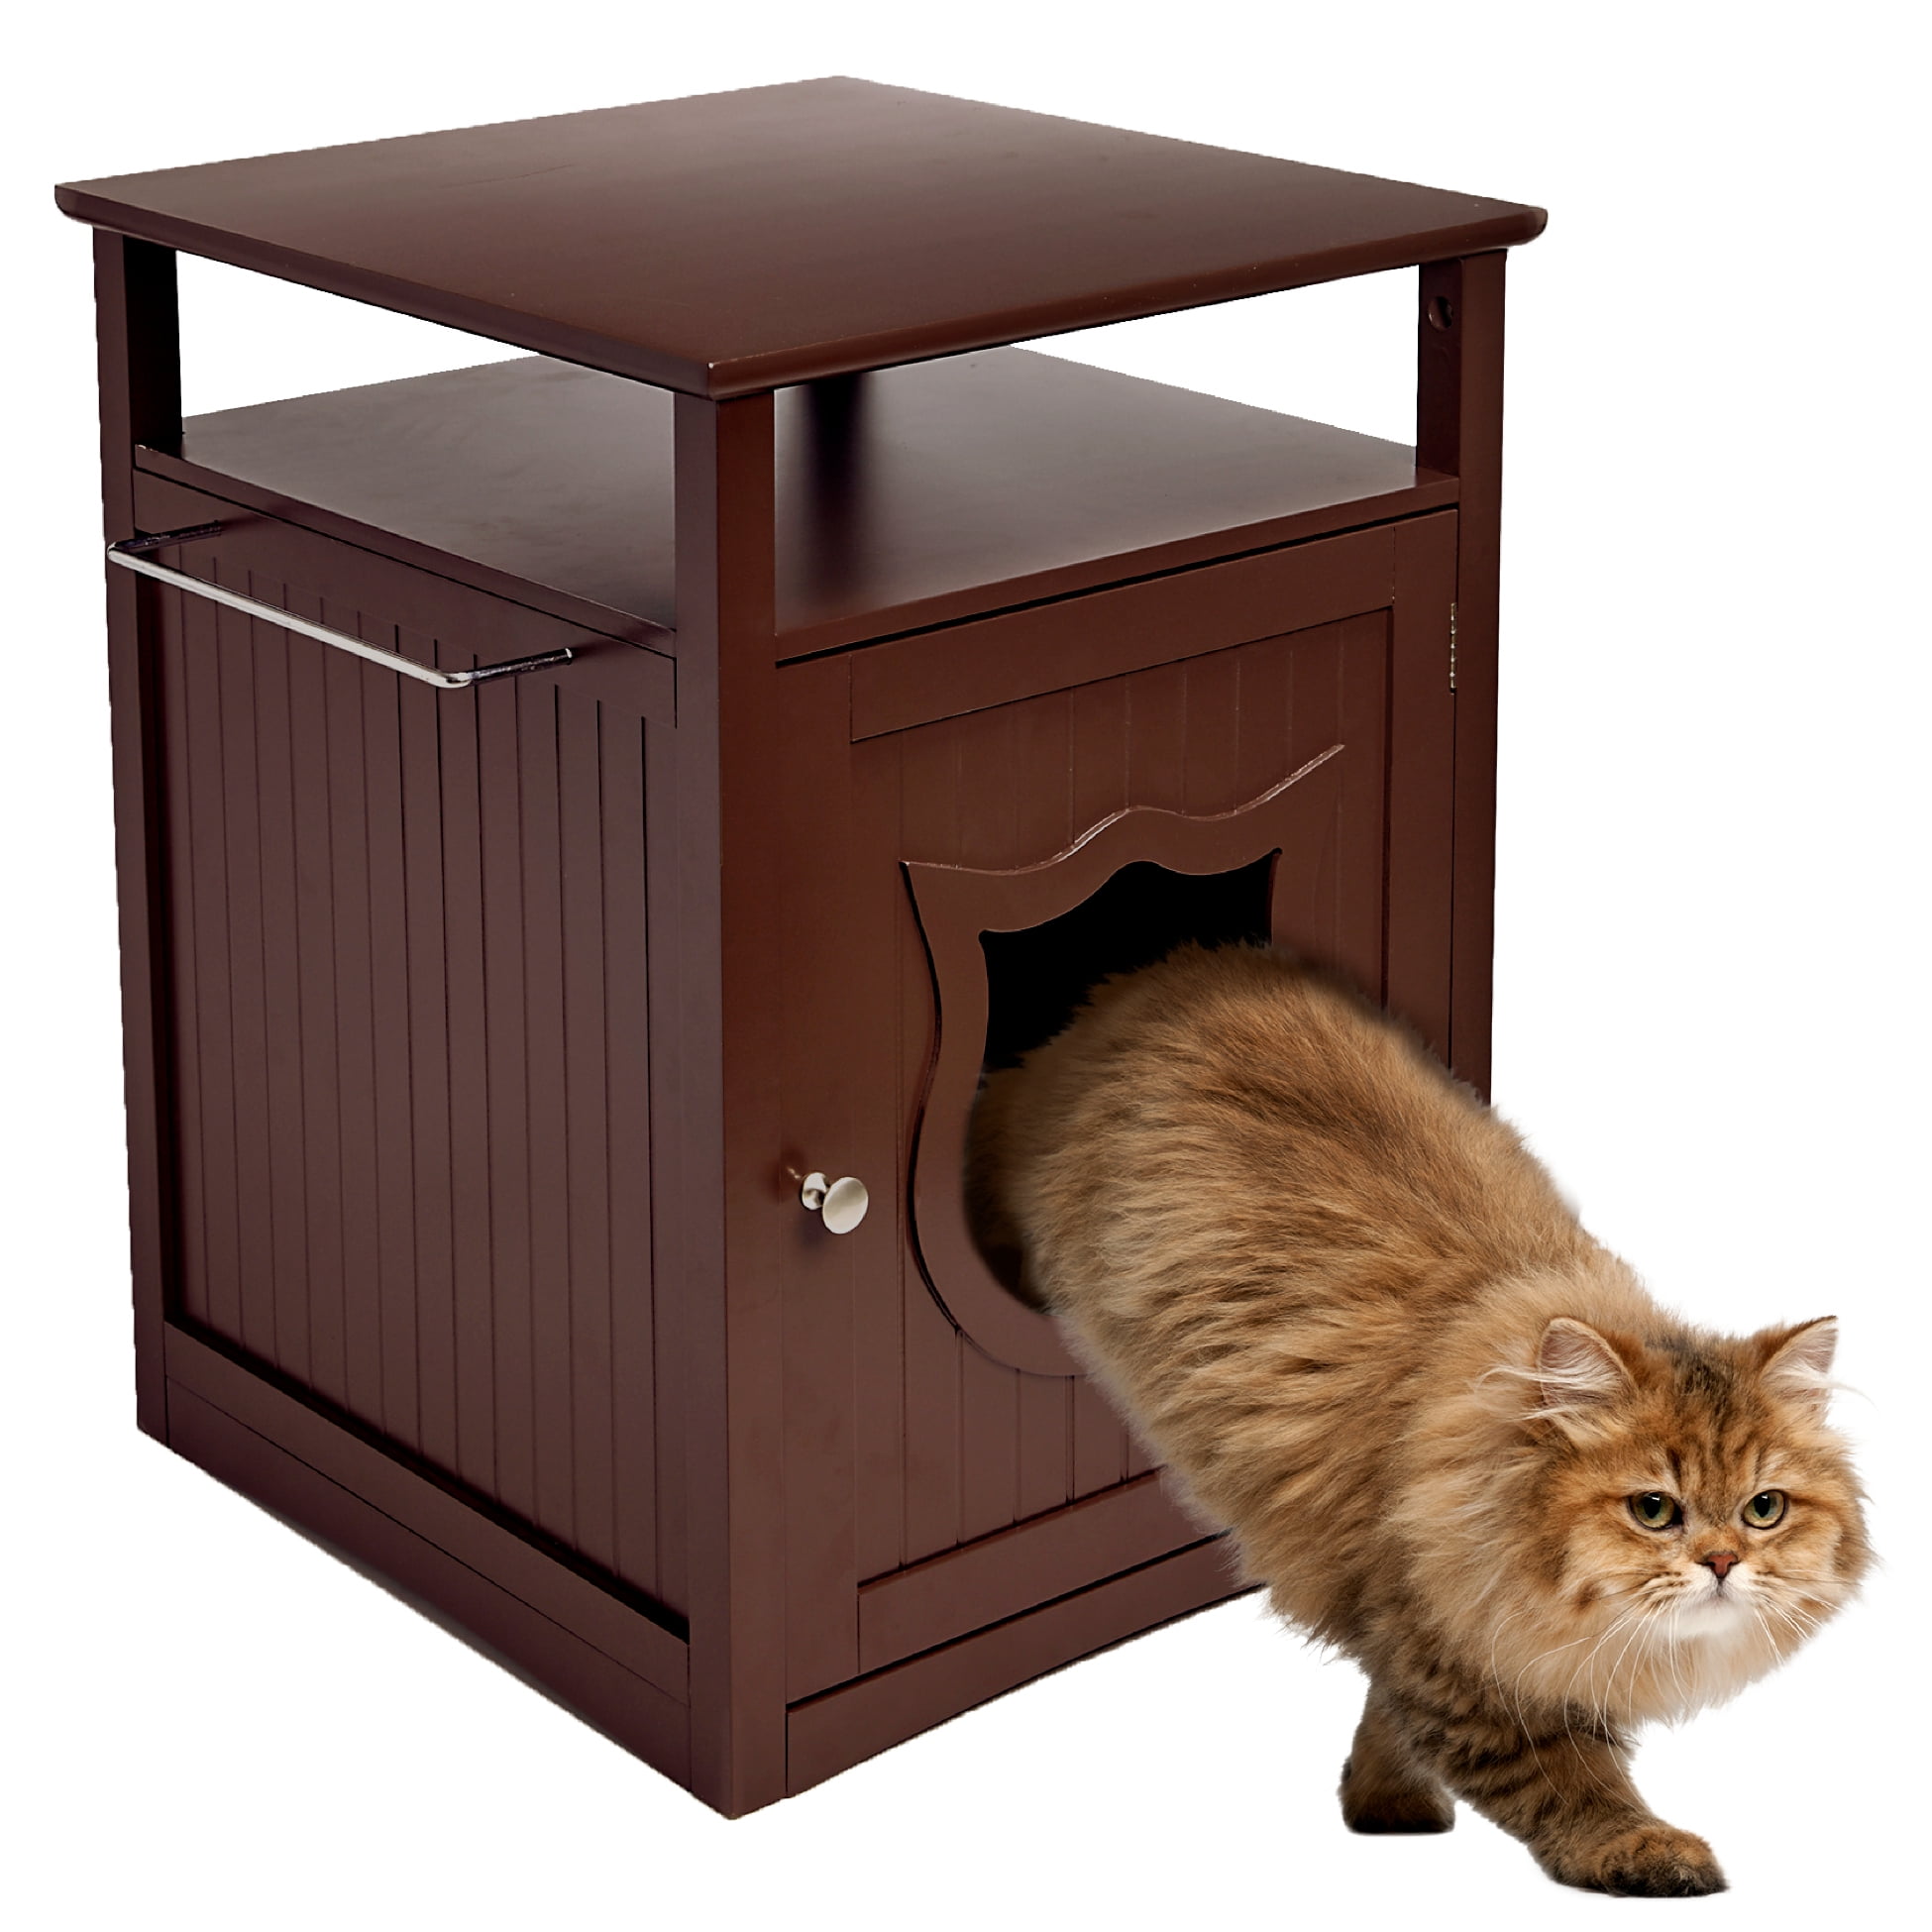 Nightstand Cat House and Litter Box Cover Designer Indoor Wooden